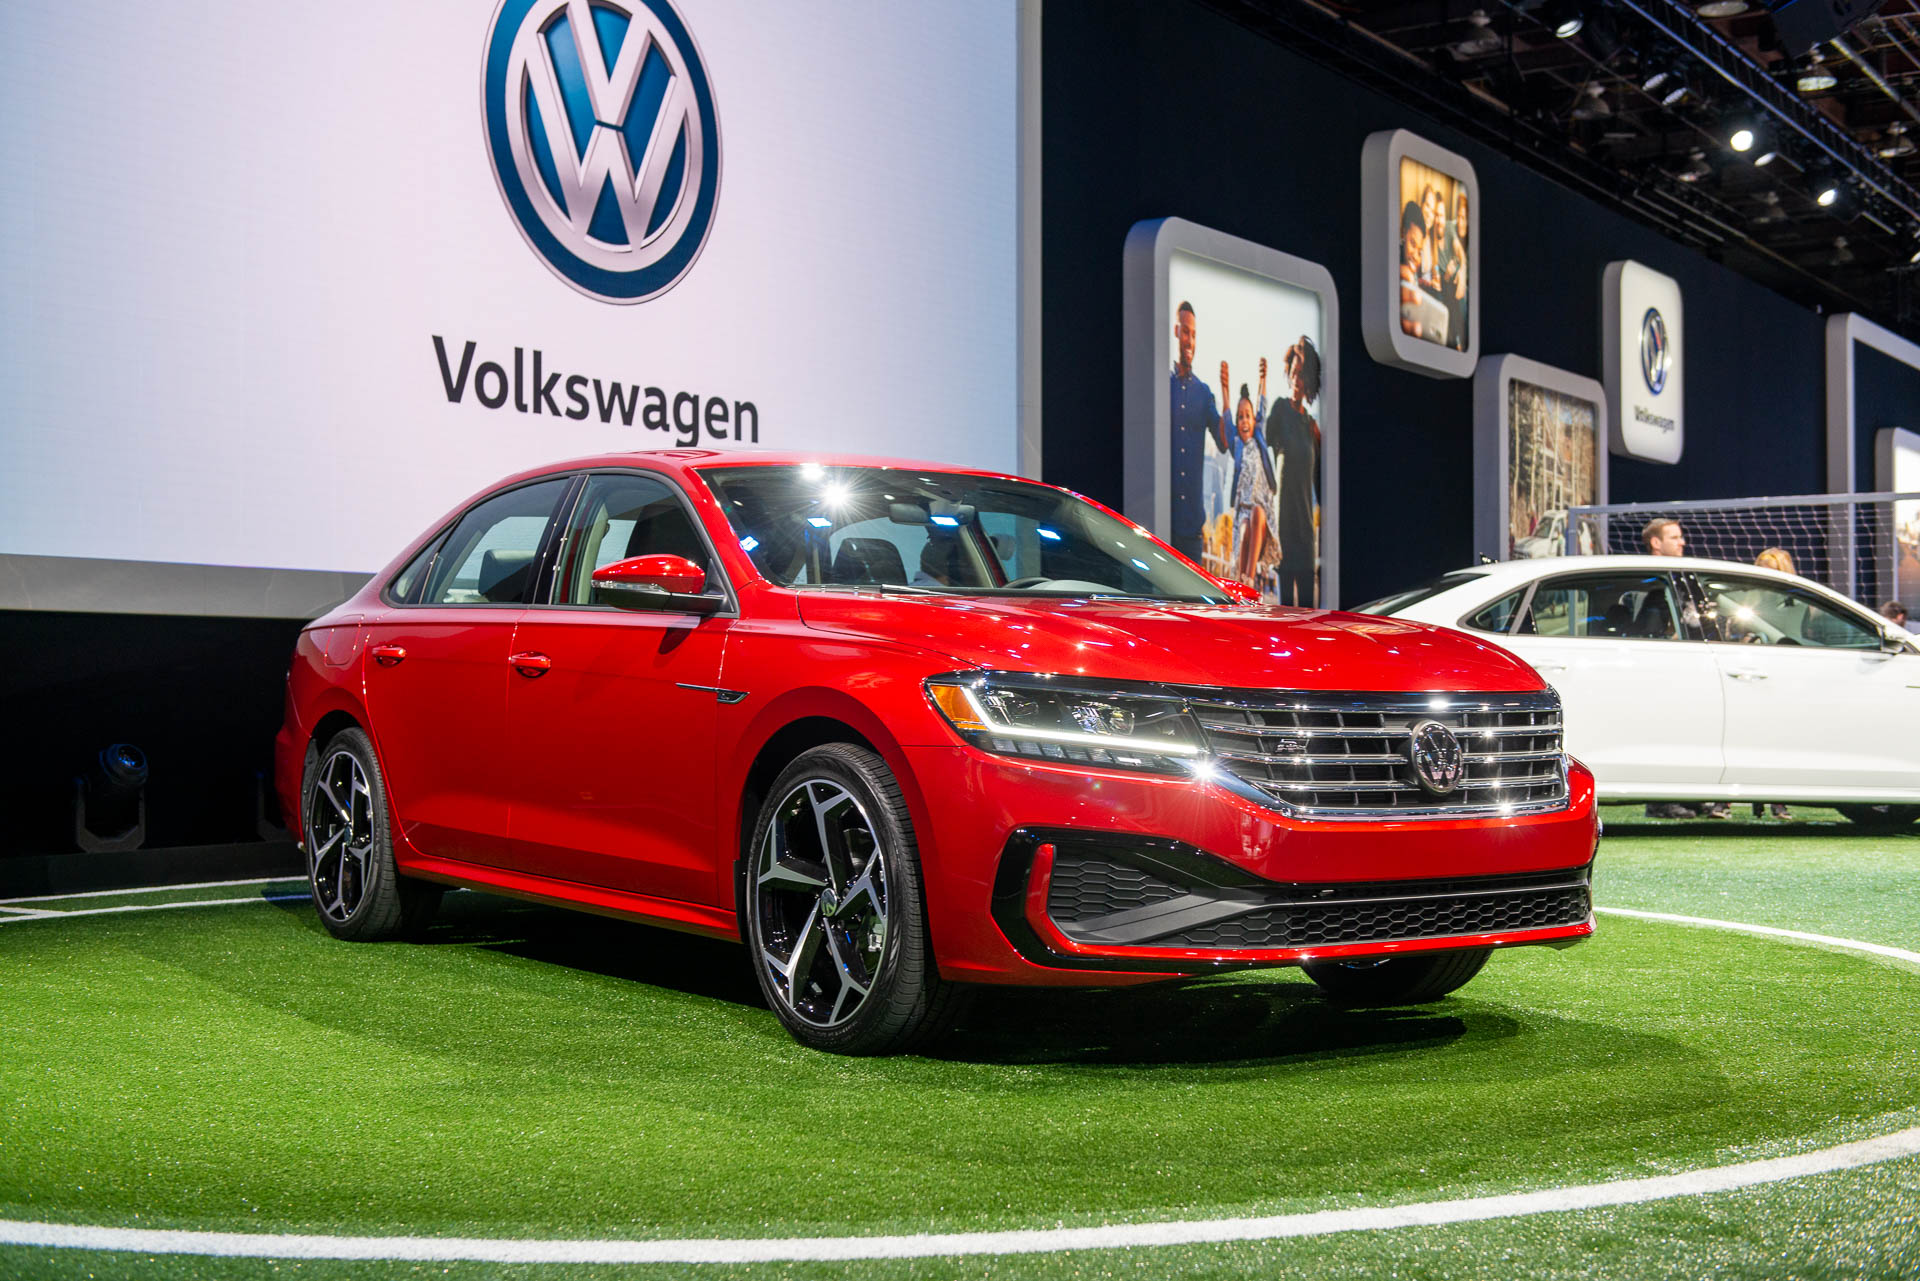 VW won't offer V-6, AWD, or manual transmission in 2020 Passat